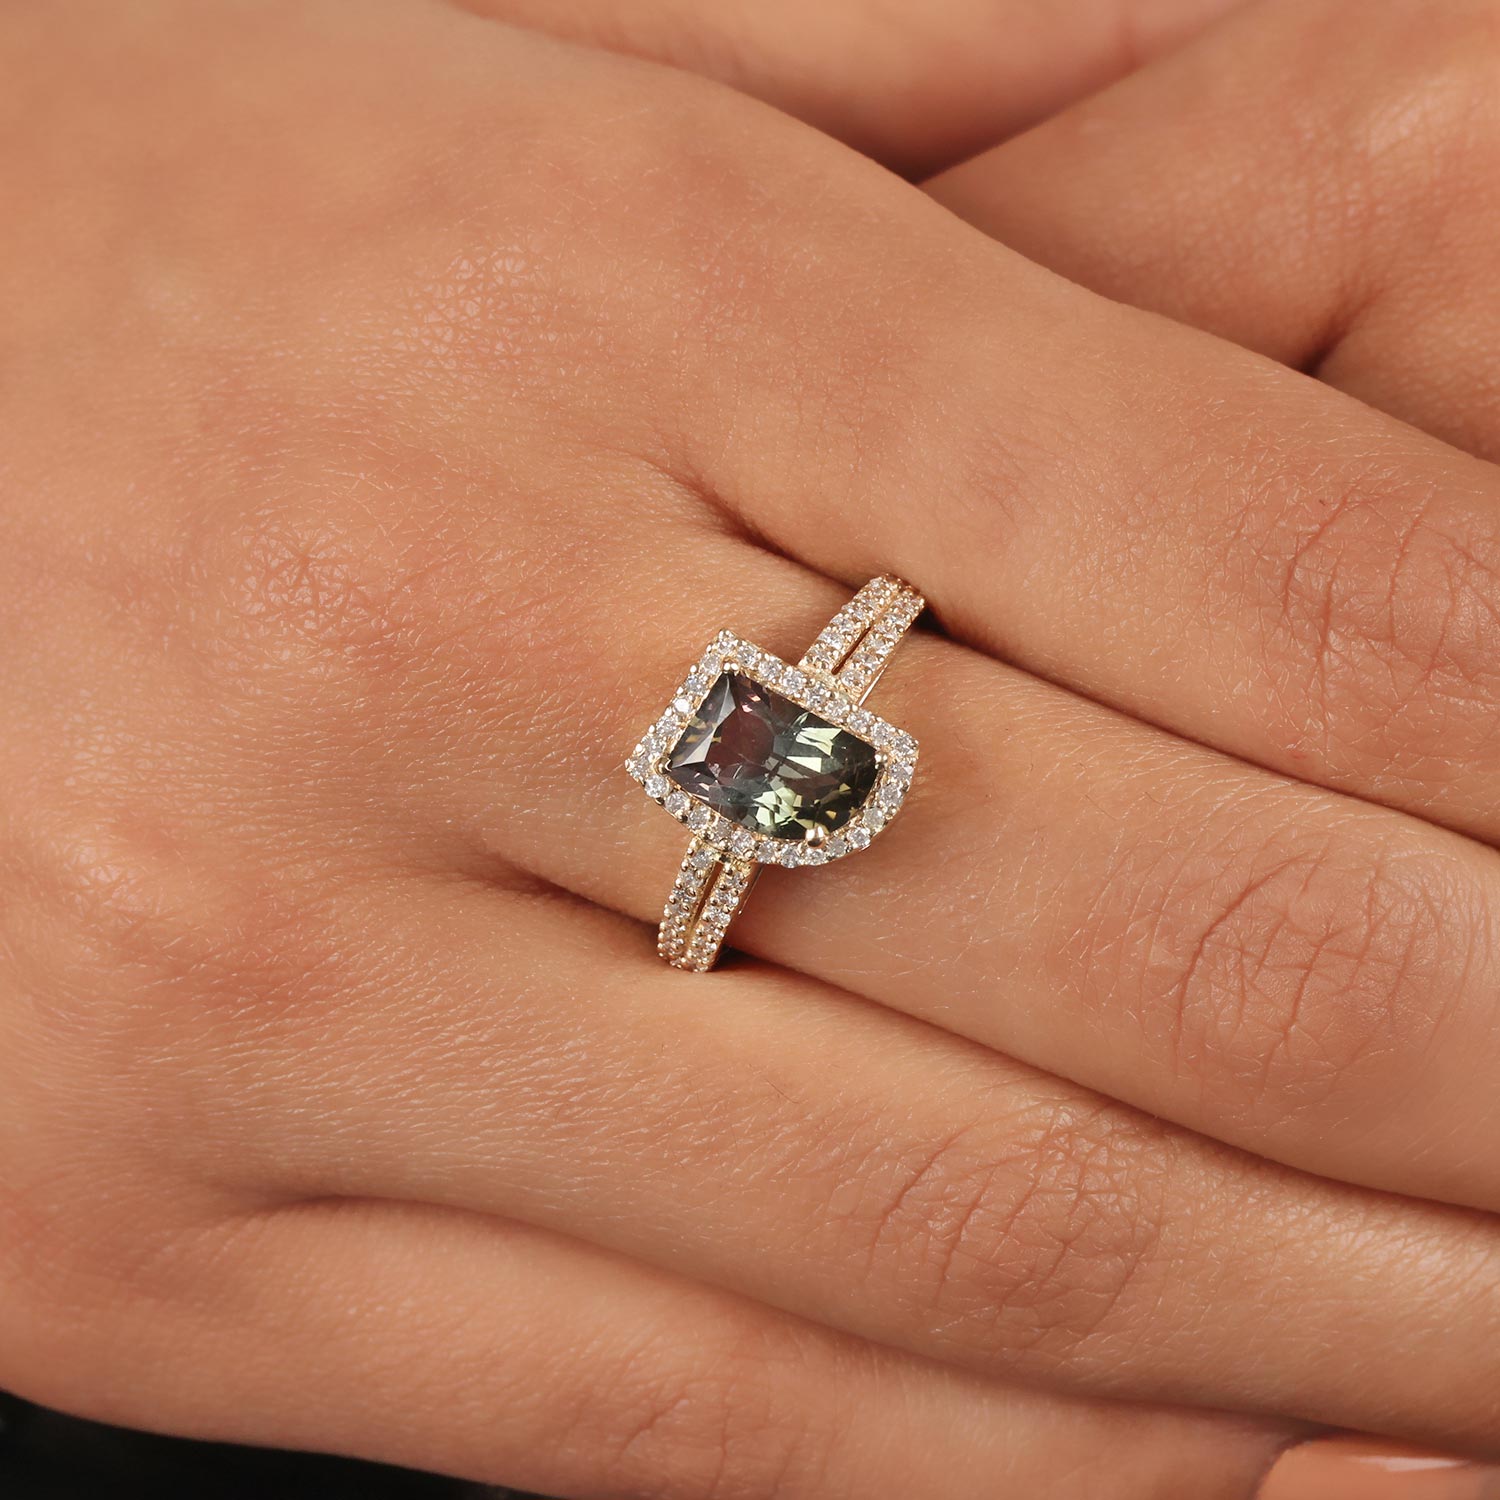 Tourmaline Gemstone 14K Solid Gold Ring Pave Diamond Fine Jewelry